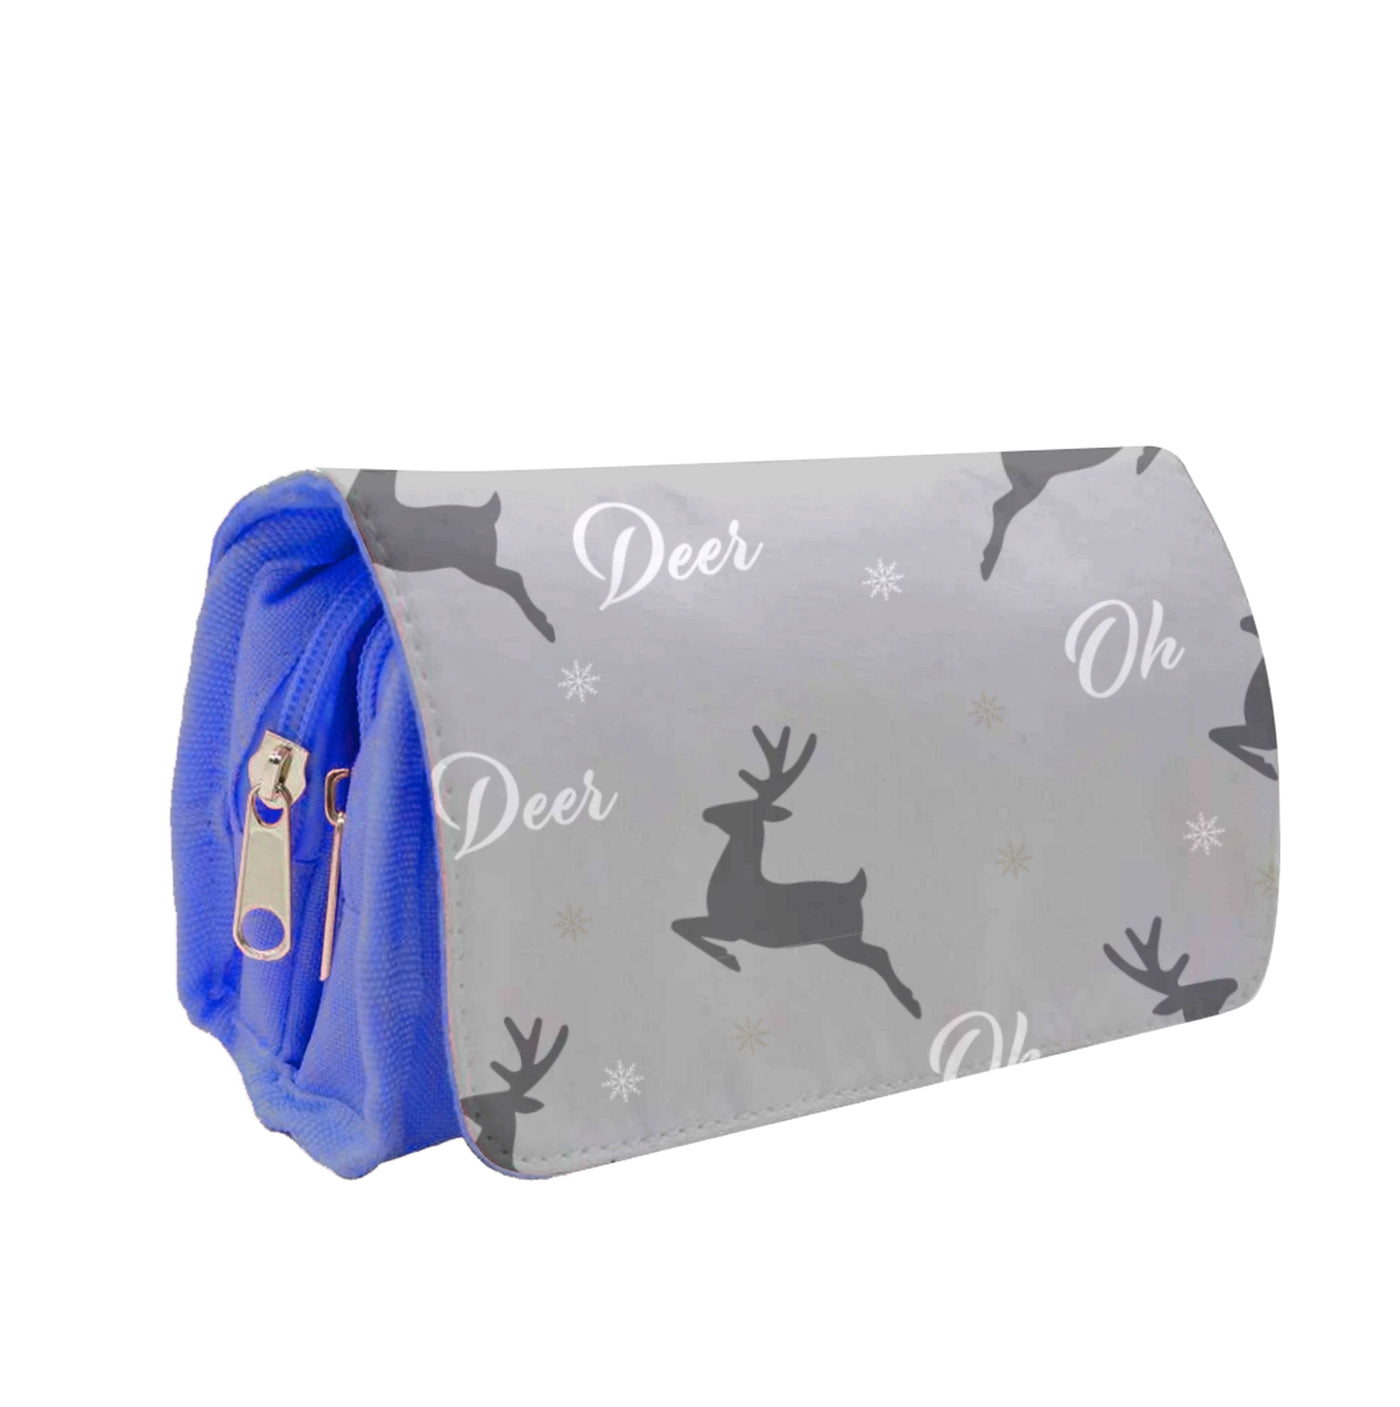 Oh Deer Christmas Pattern Pencil Case